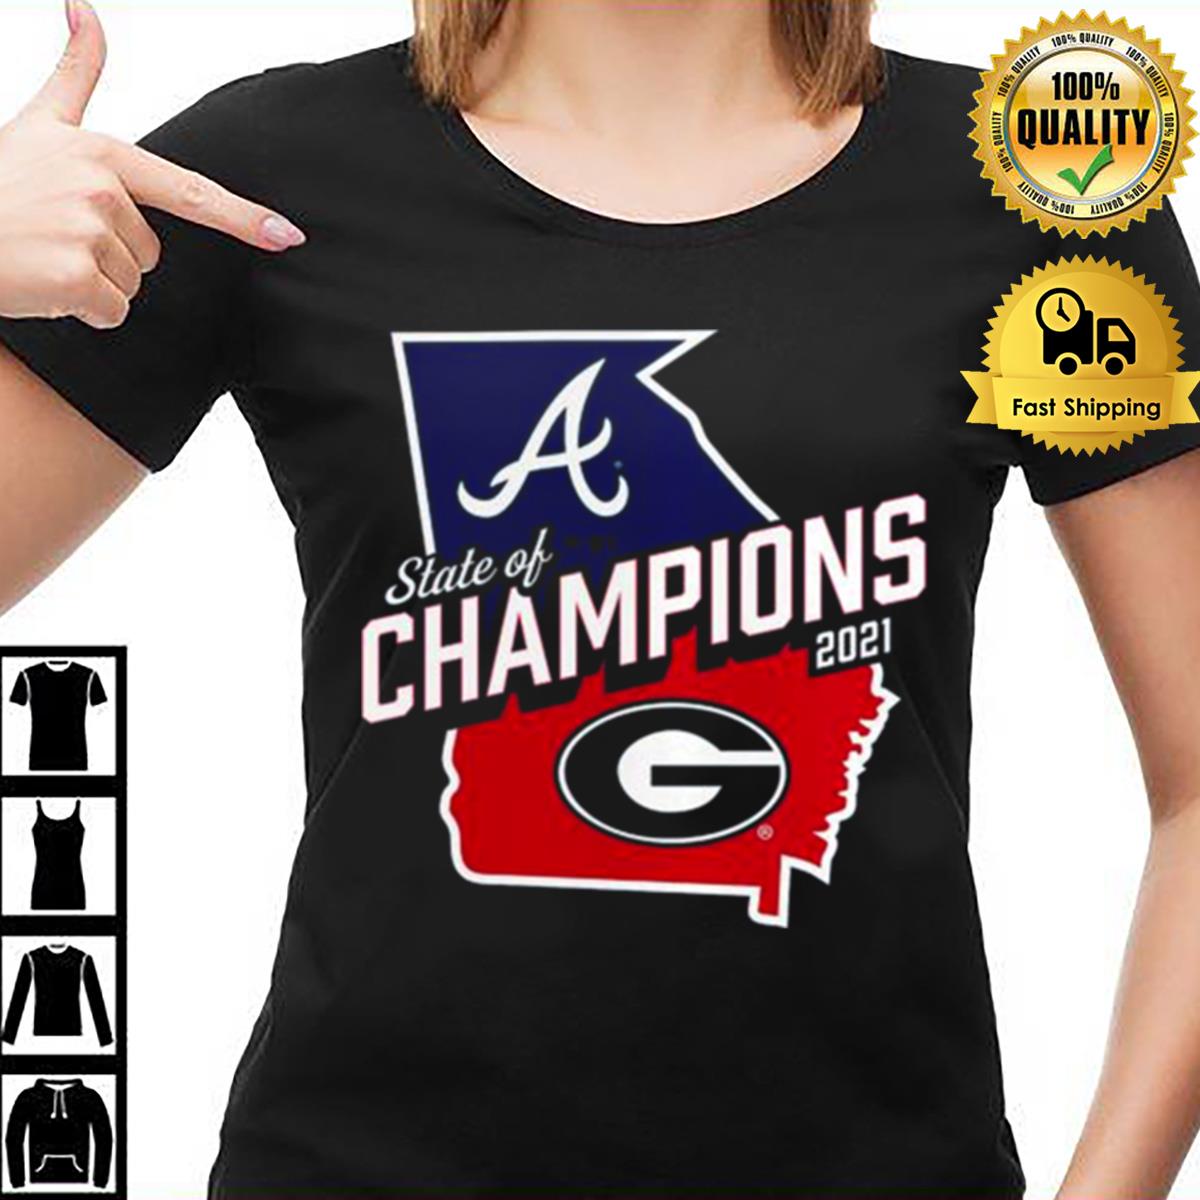 Team Georgia Bulldogs and Atlanta Braves georgia state of champions 2021  shirt, hoodie, longsleeve tee, sweater